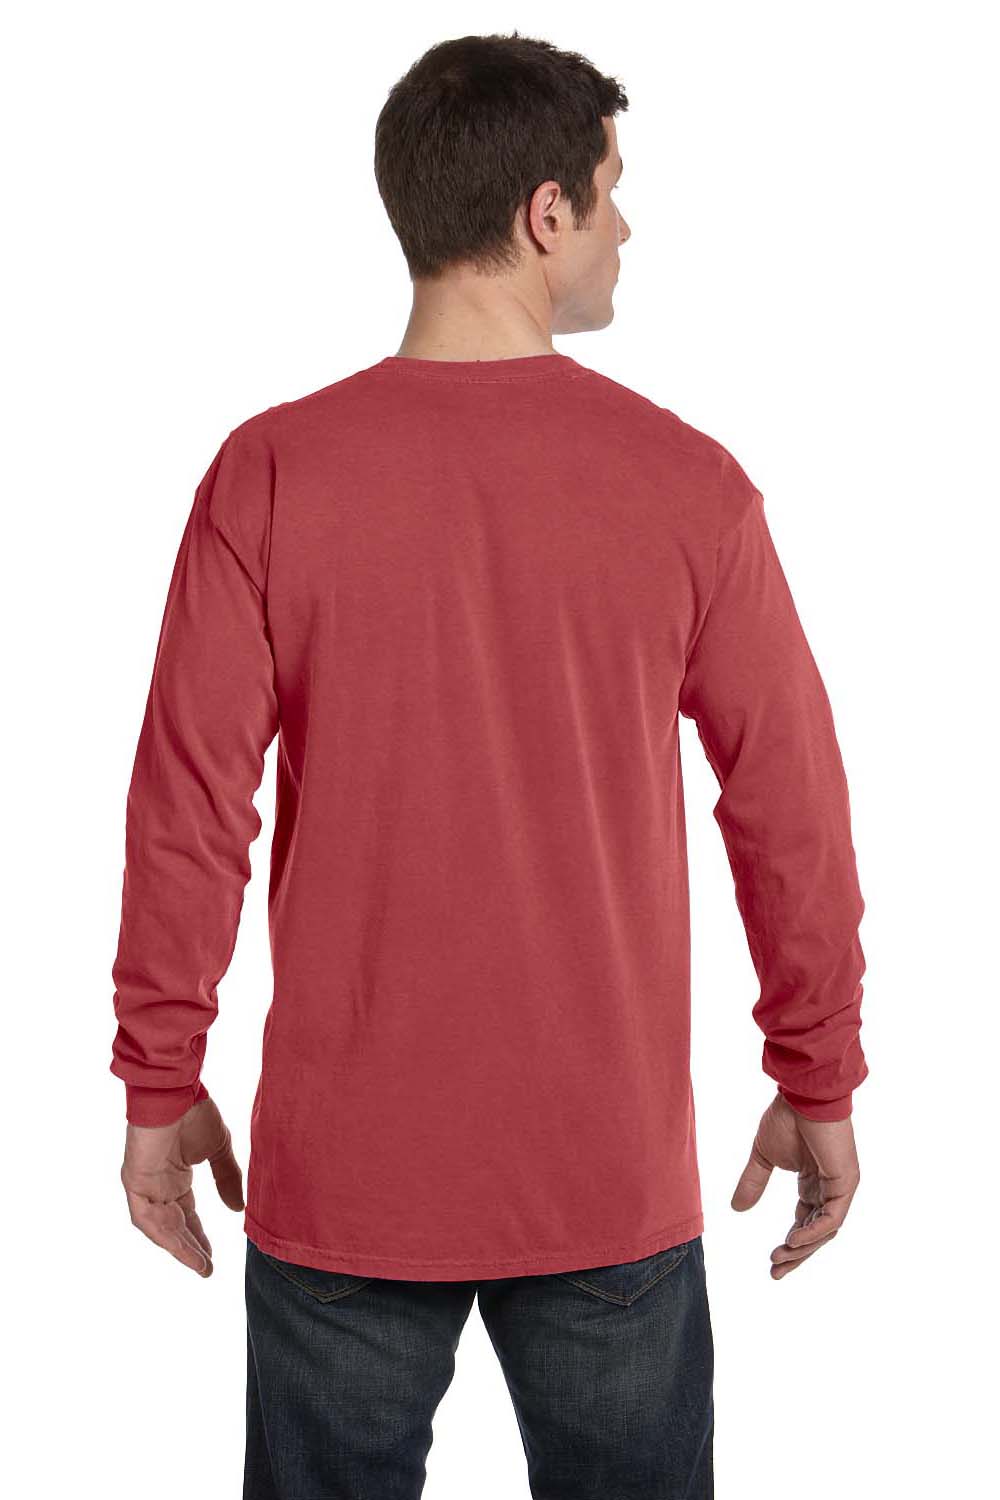 Comfort Colors C6014 Mens Long Sleeve Crewneck T-Shirt Crimson Red Back